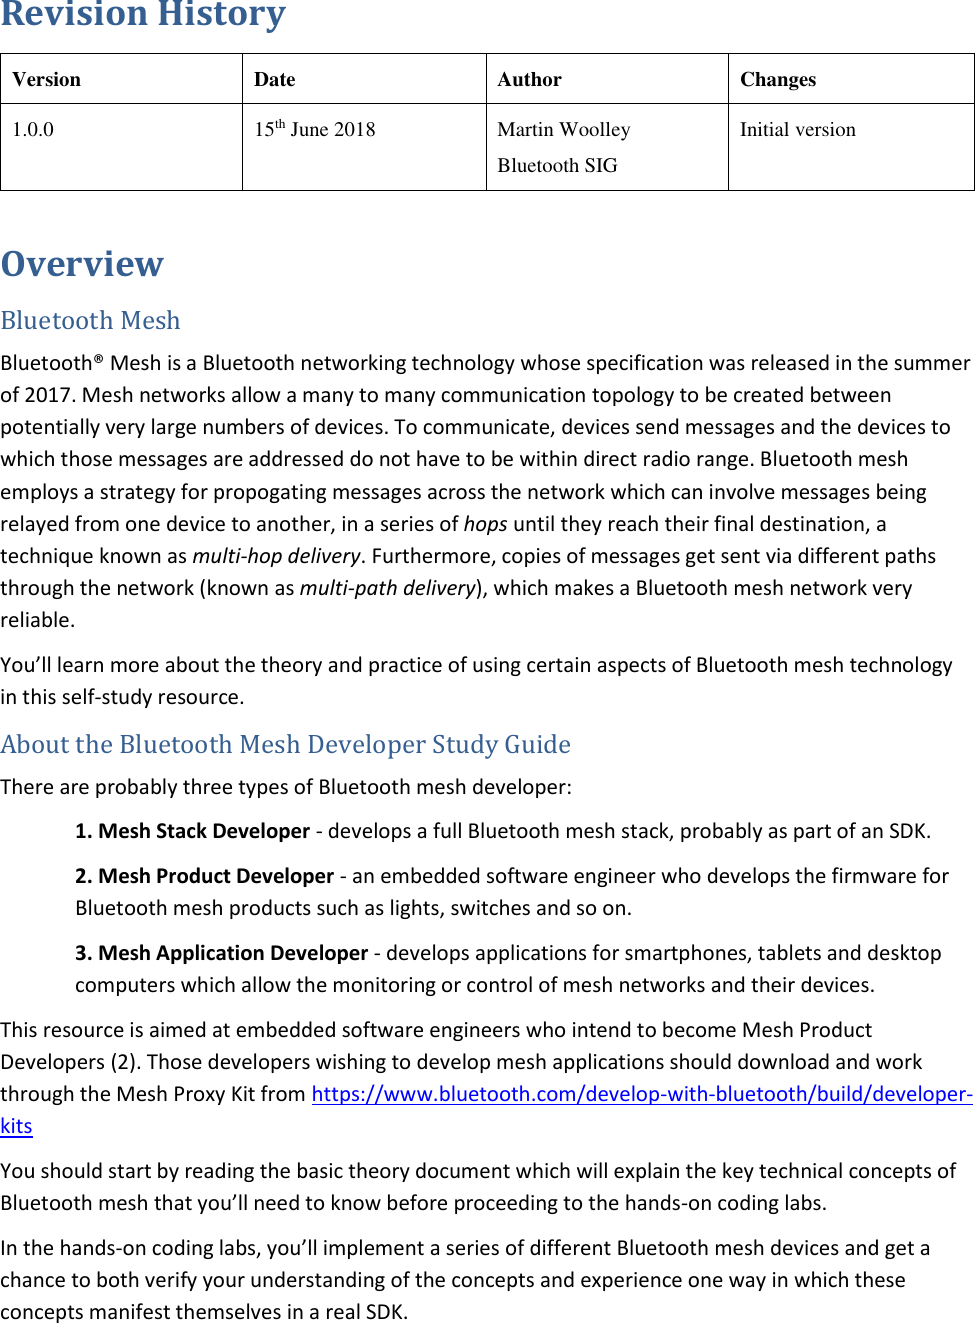 Page 3 of 4 - Bluetooth Mesh Developer Study Guide - 1. START HERE Orientation V1.0